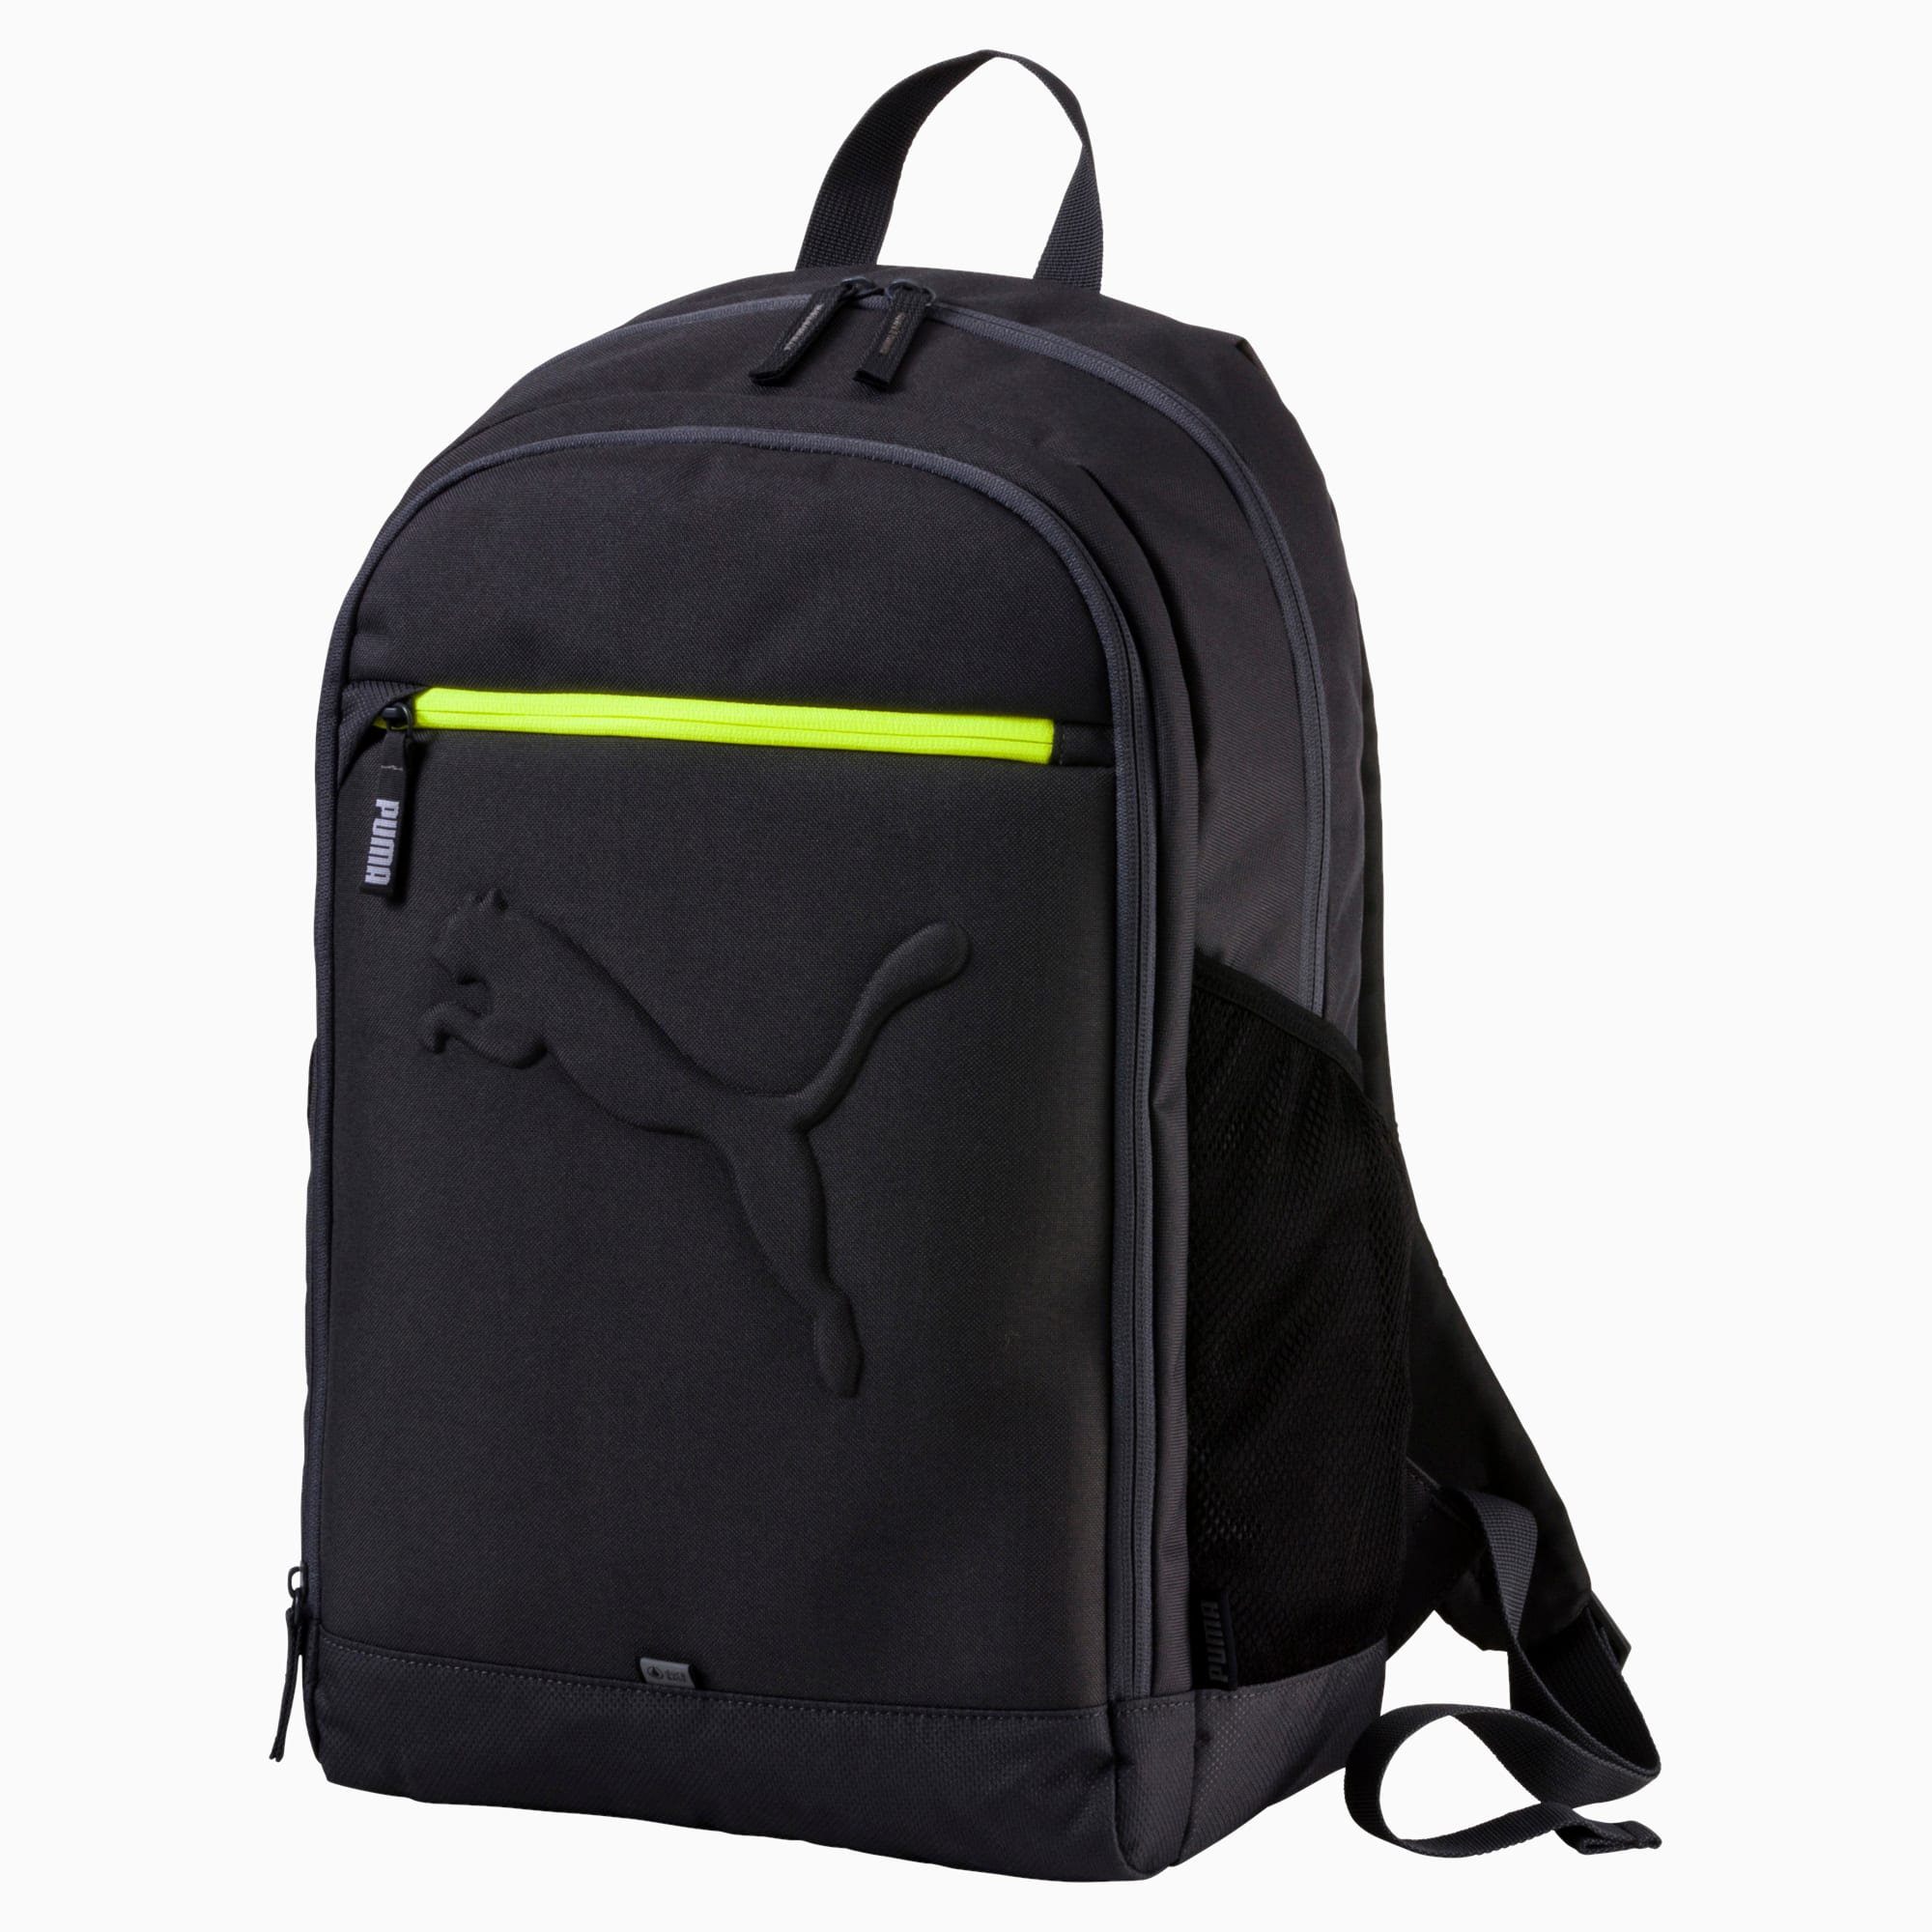 puma rucksack buzz backpack